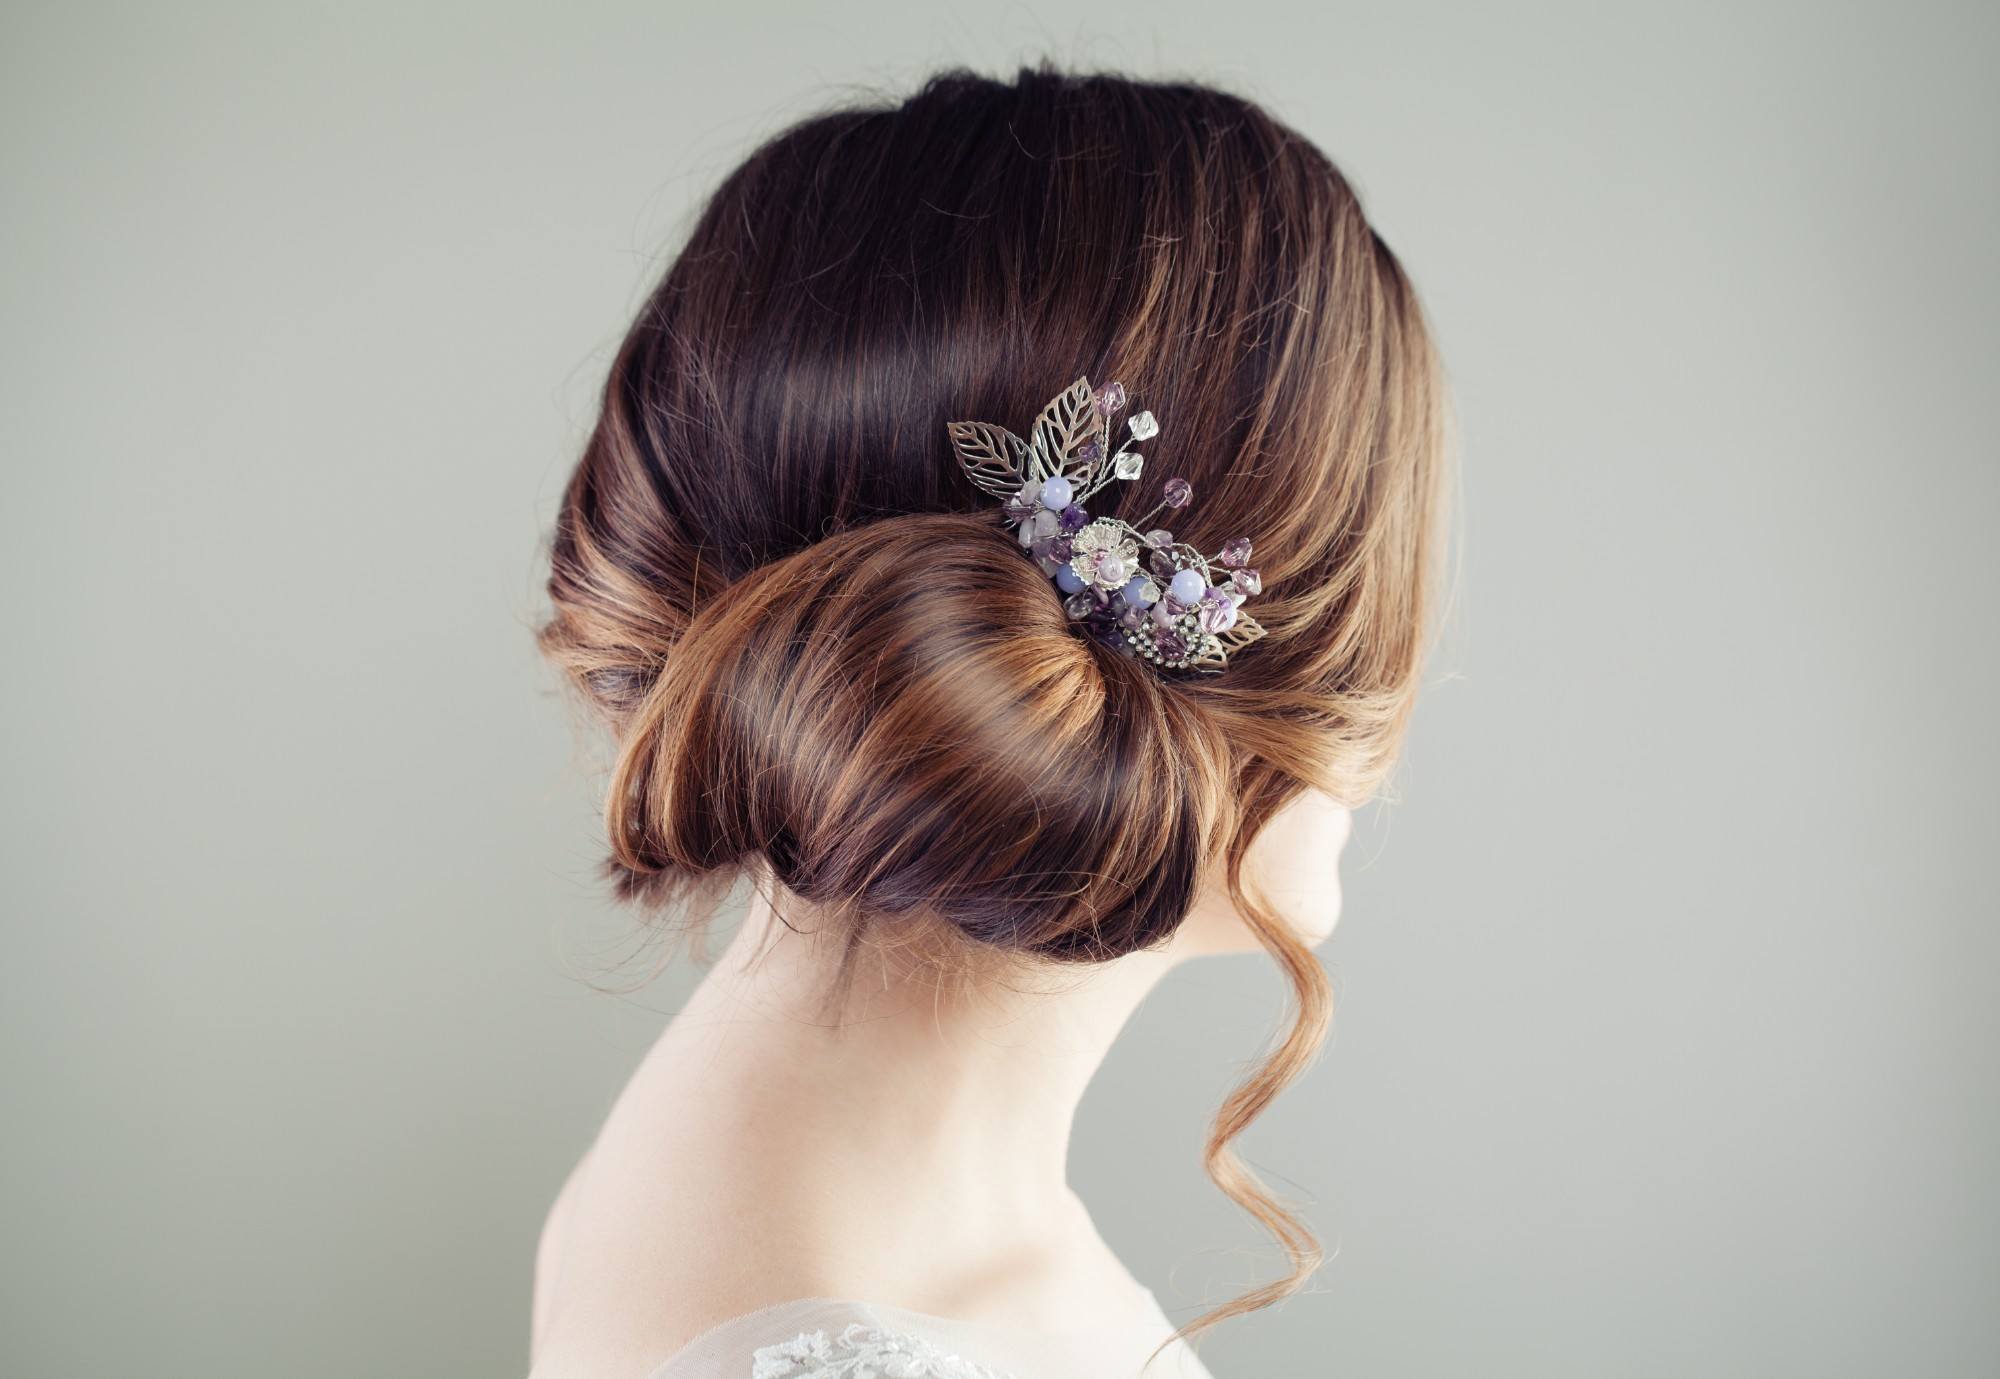 Easy Twisted Updo | Prom & Wedding Hairstyle | BabesInHairland.com